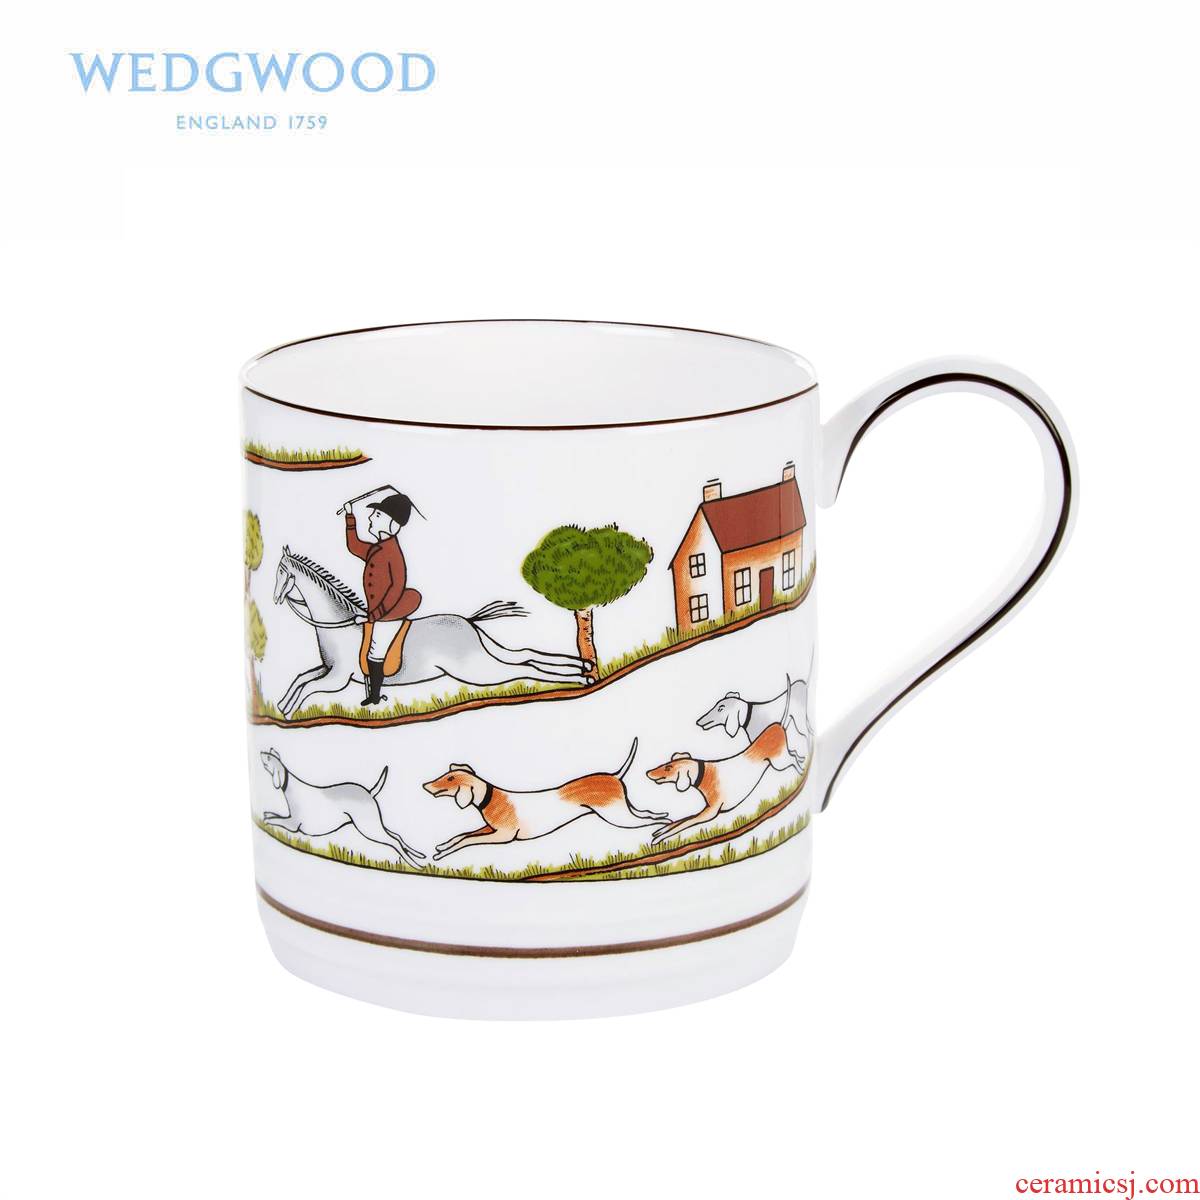 Wedgwood waterford Wedgwood Hunting Scene Hunting series ipads China mugs WNF coffee spoon